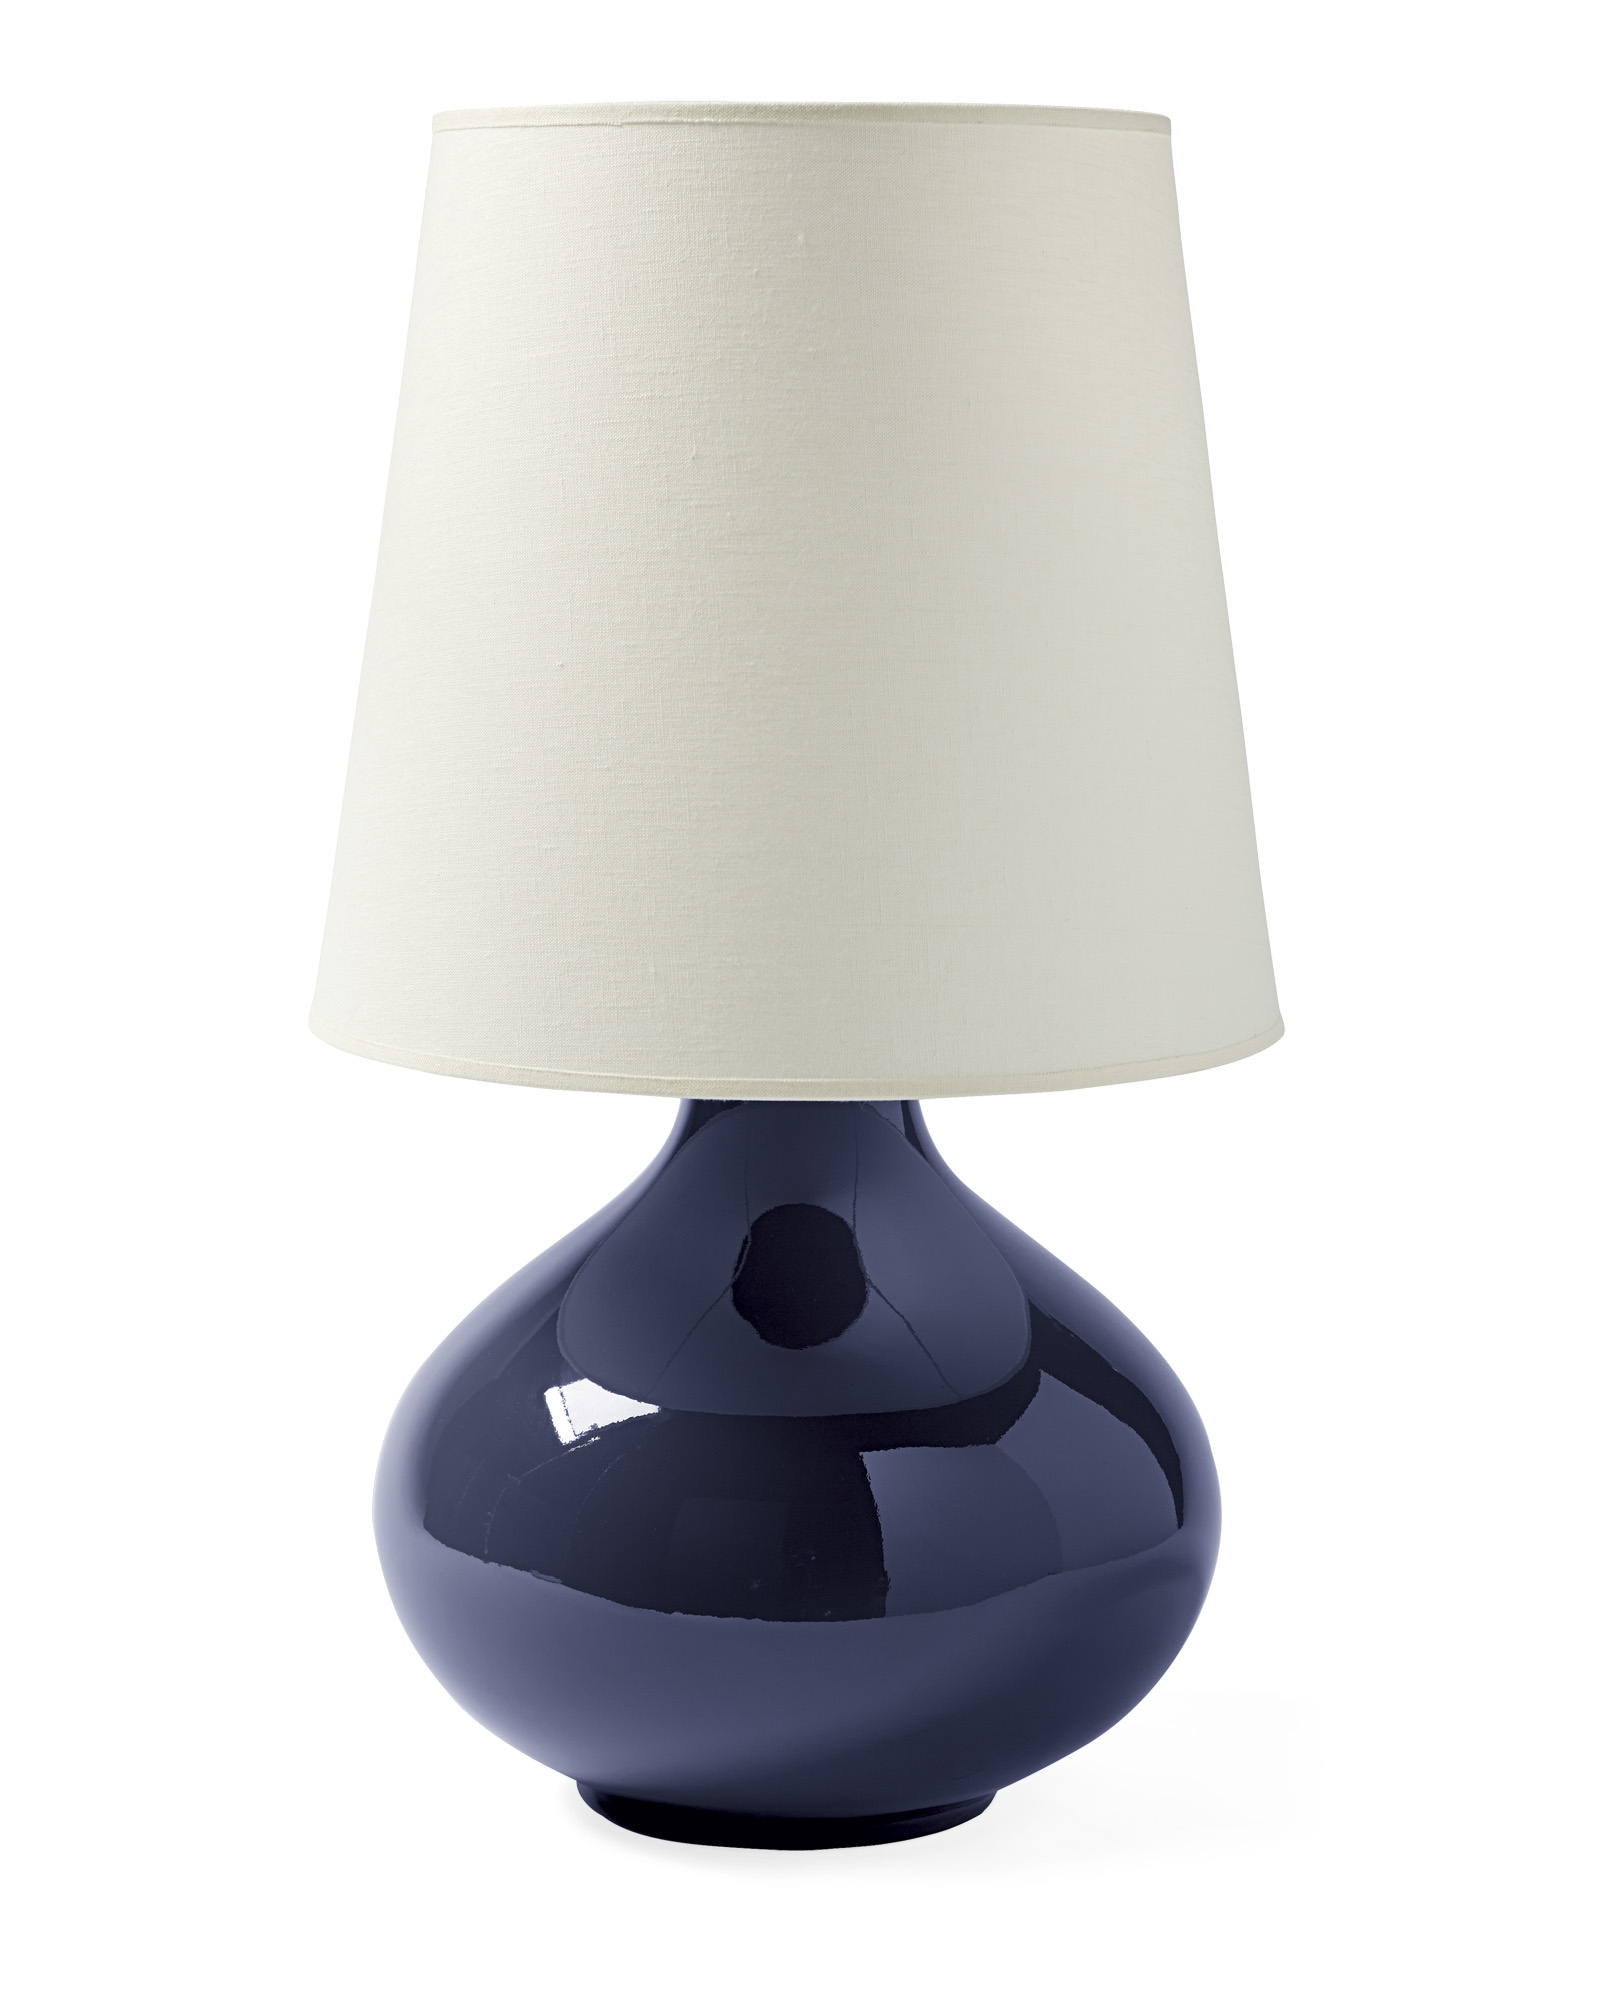 Montclair Table Lamp-Navy - Image 0